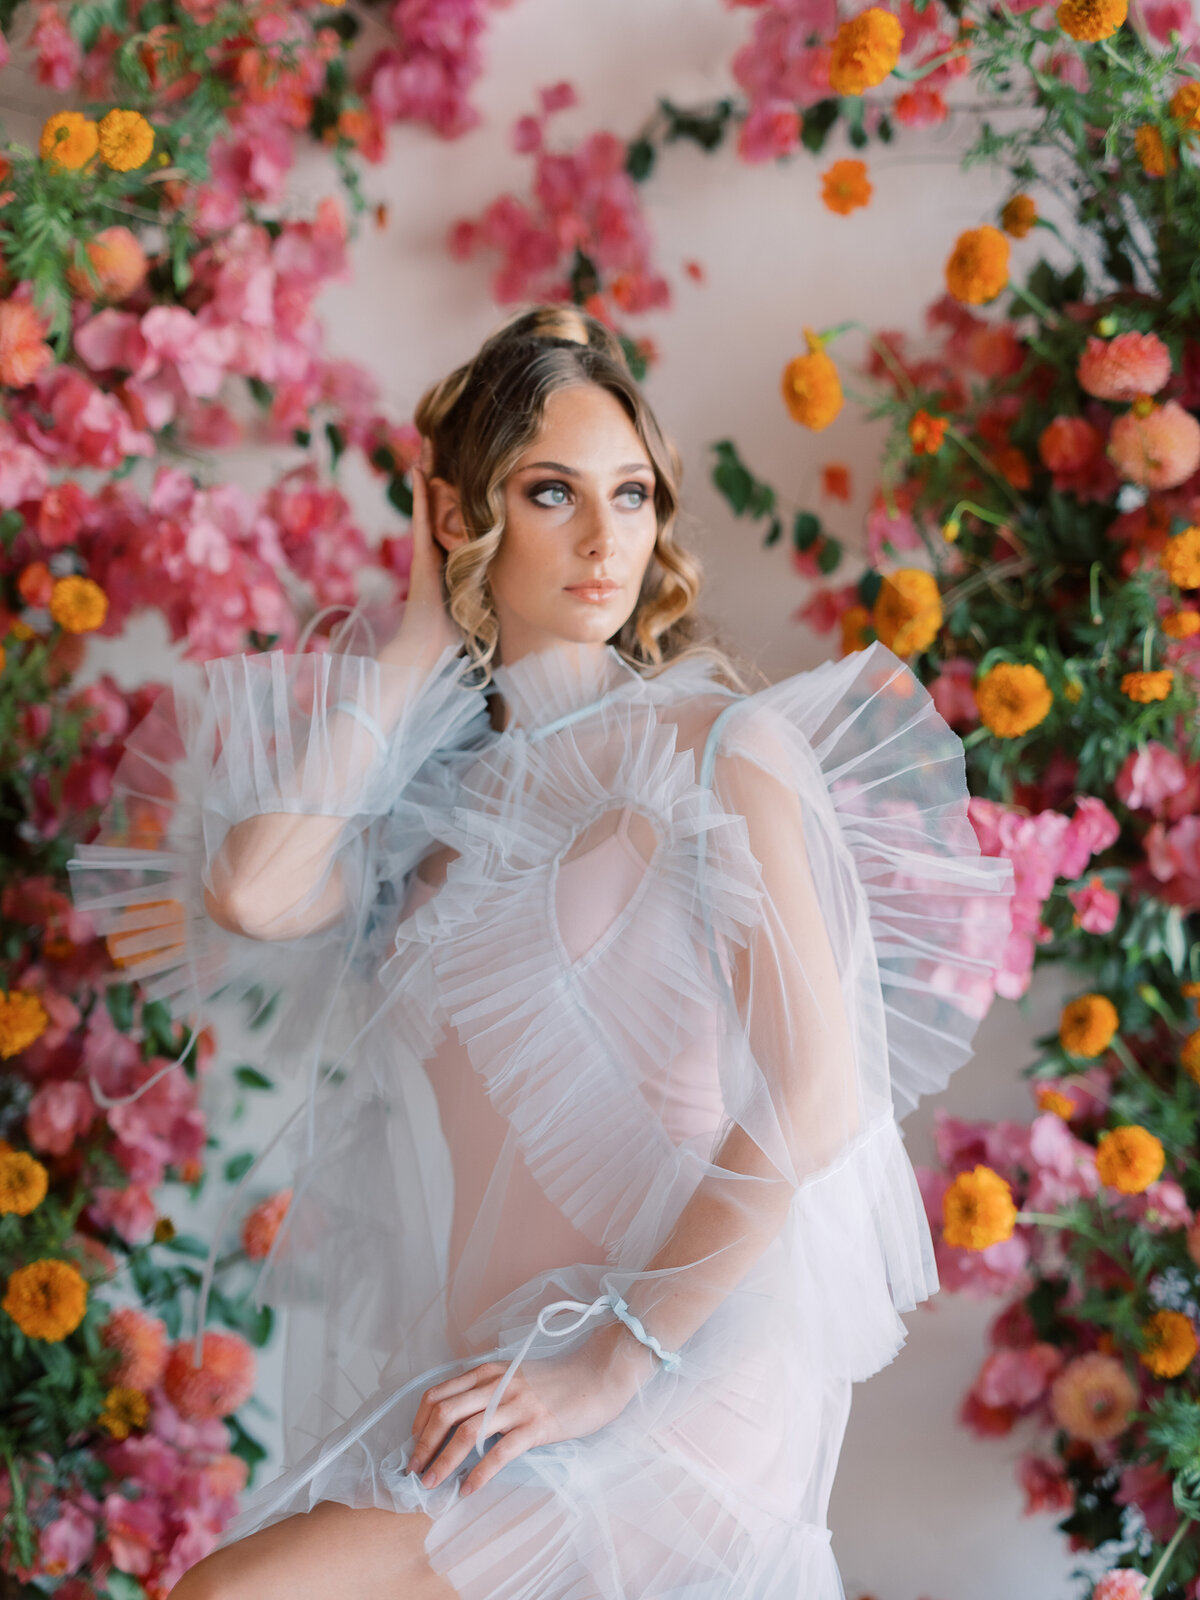 Sarah Rae Floral Designs Wedding Event Florist Flowers Kentucky Chic Whimsical Romantic Weddings18